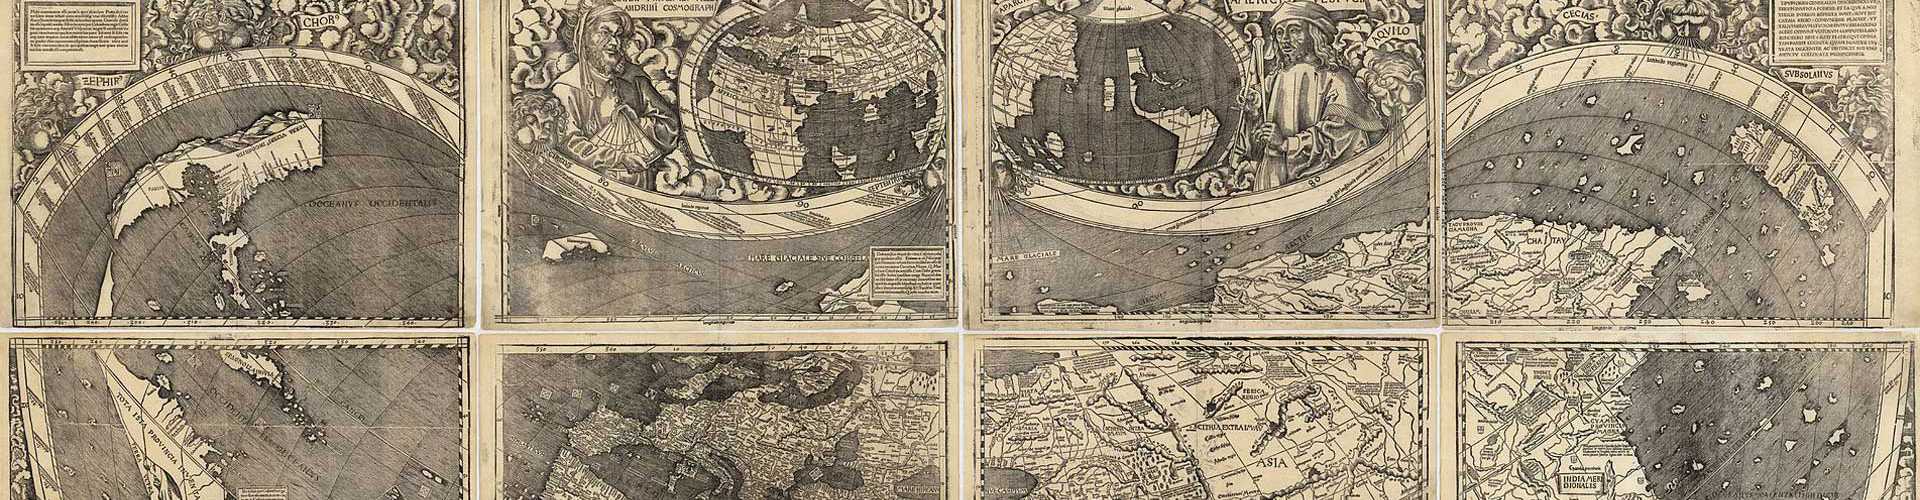 A Land Beyond The Stars. Amerigo Vespucci and Martin Waldseemüller’s Map of the World